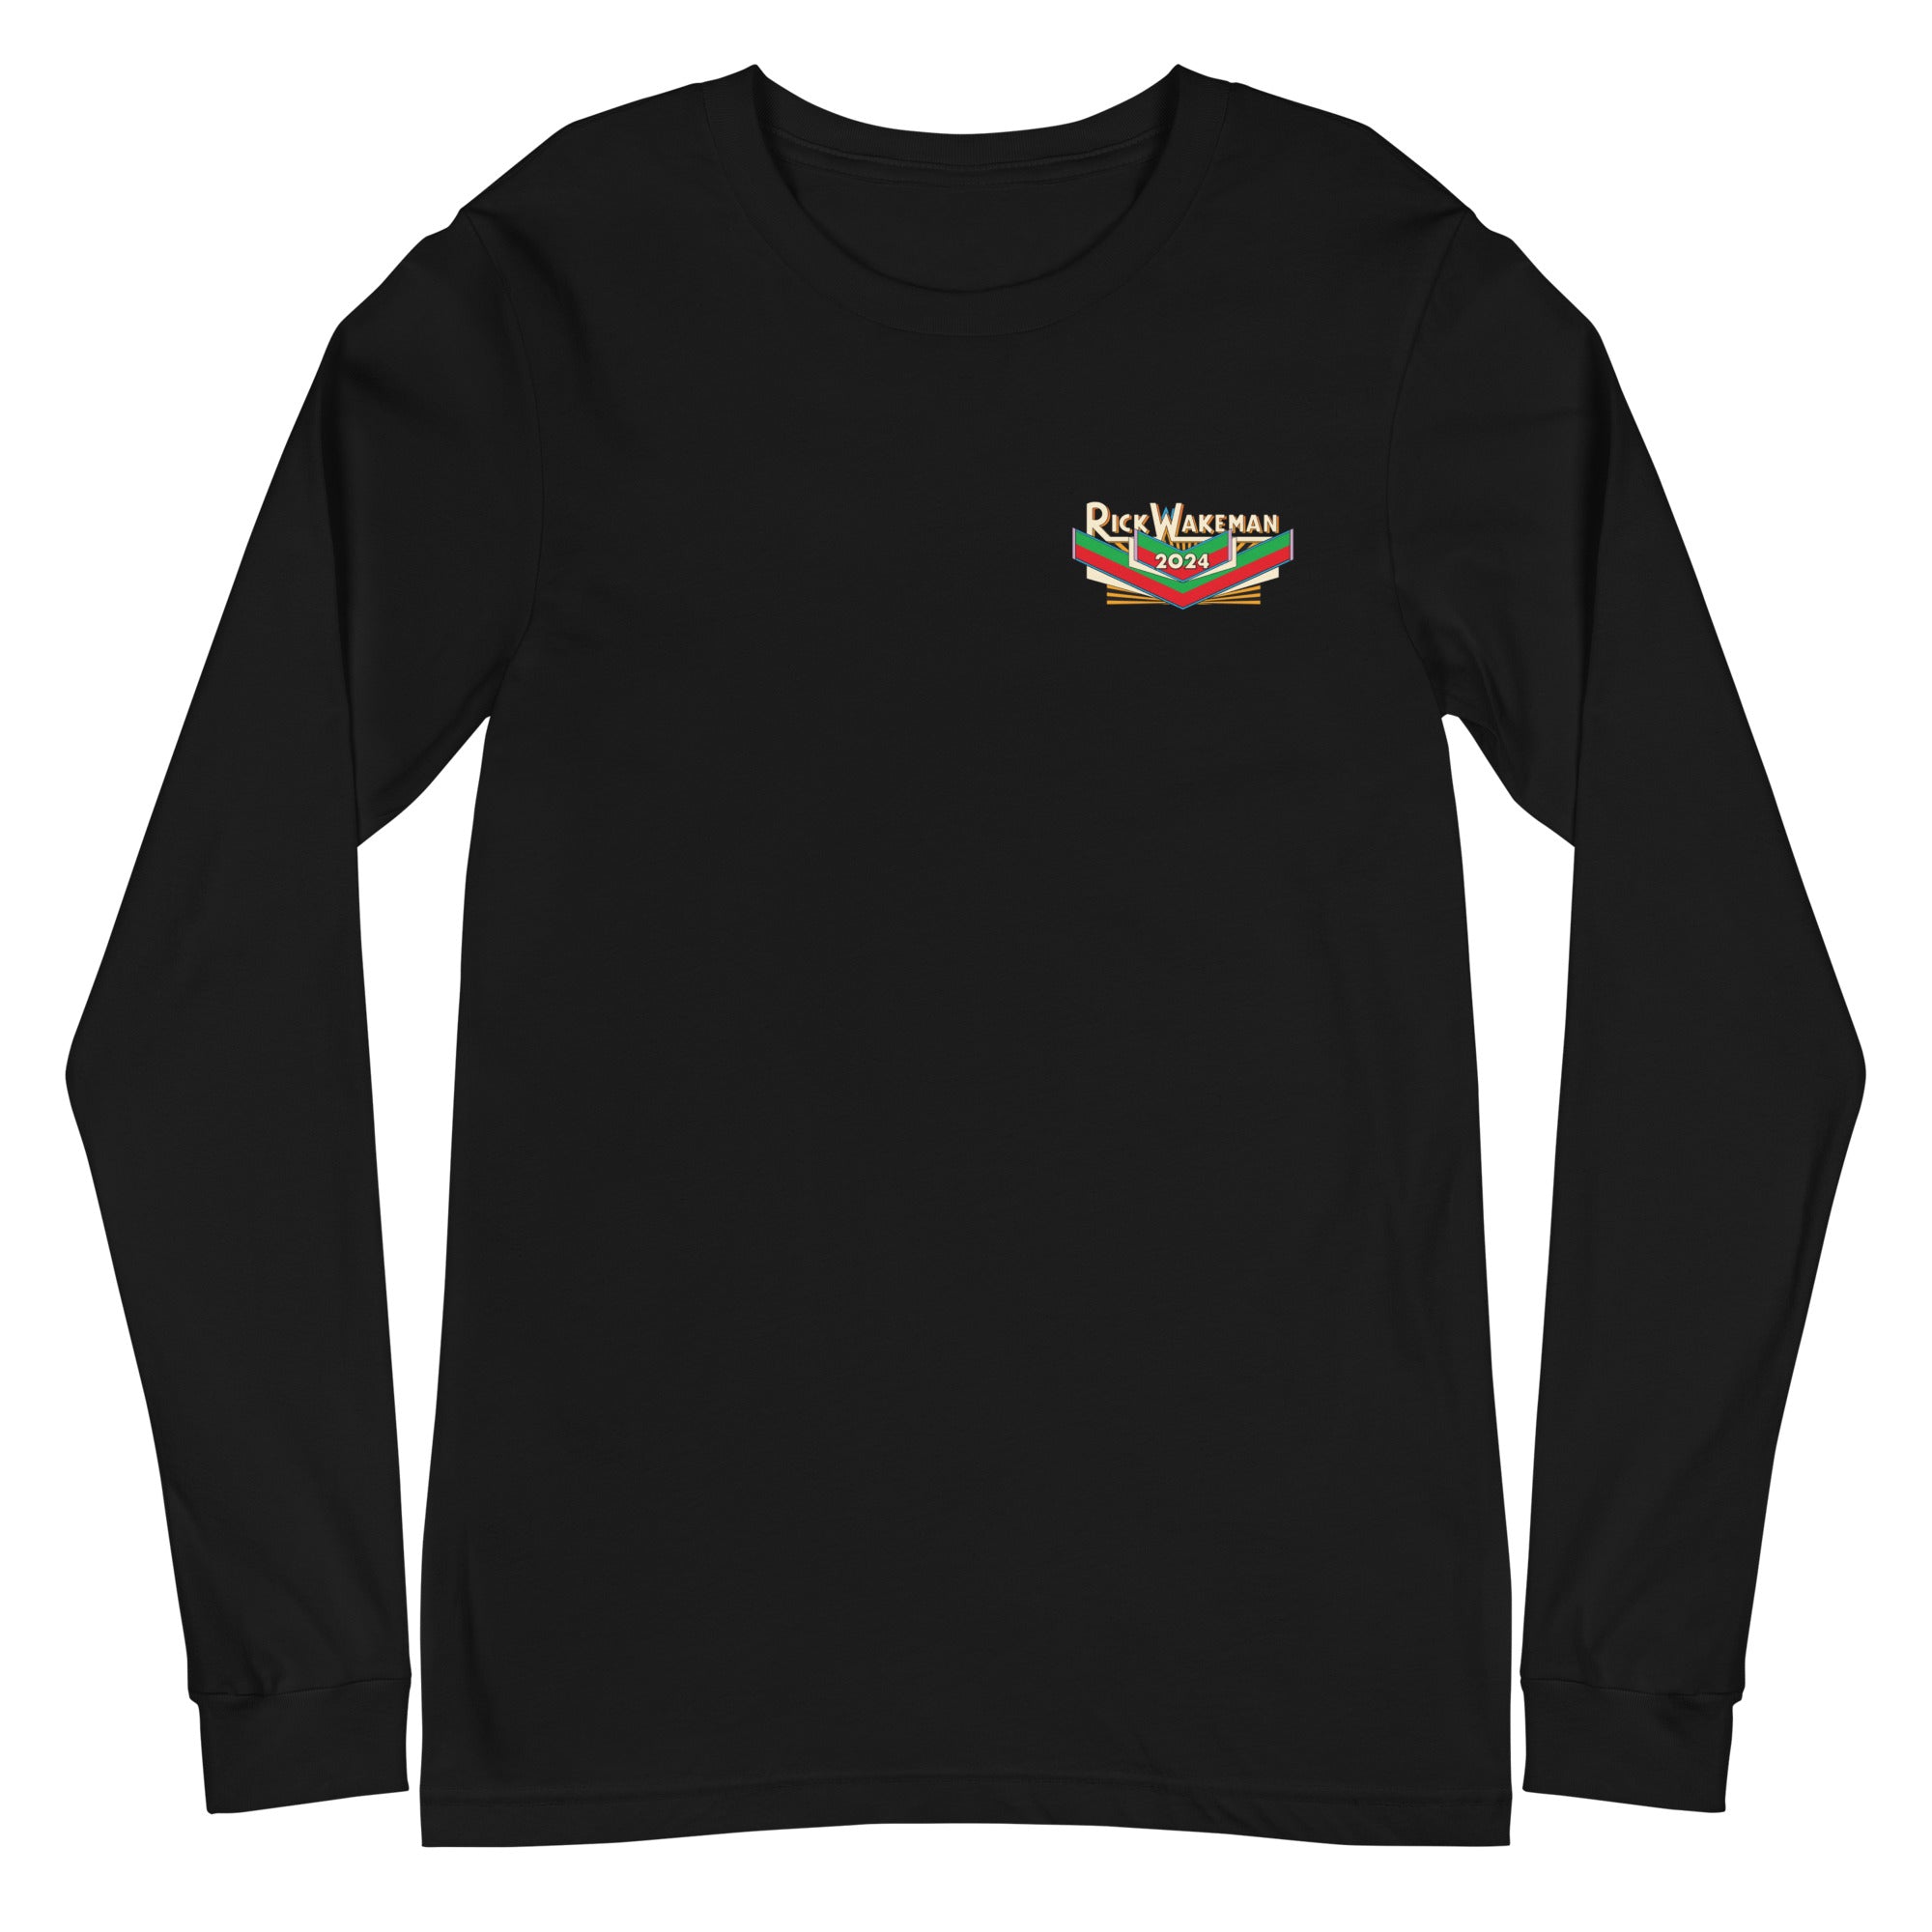 Rick Wakeman Long Sleeve Tour T-Shirt